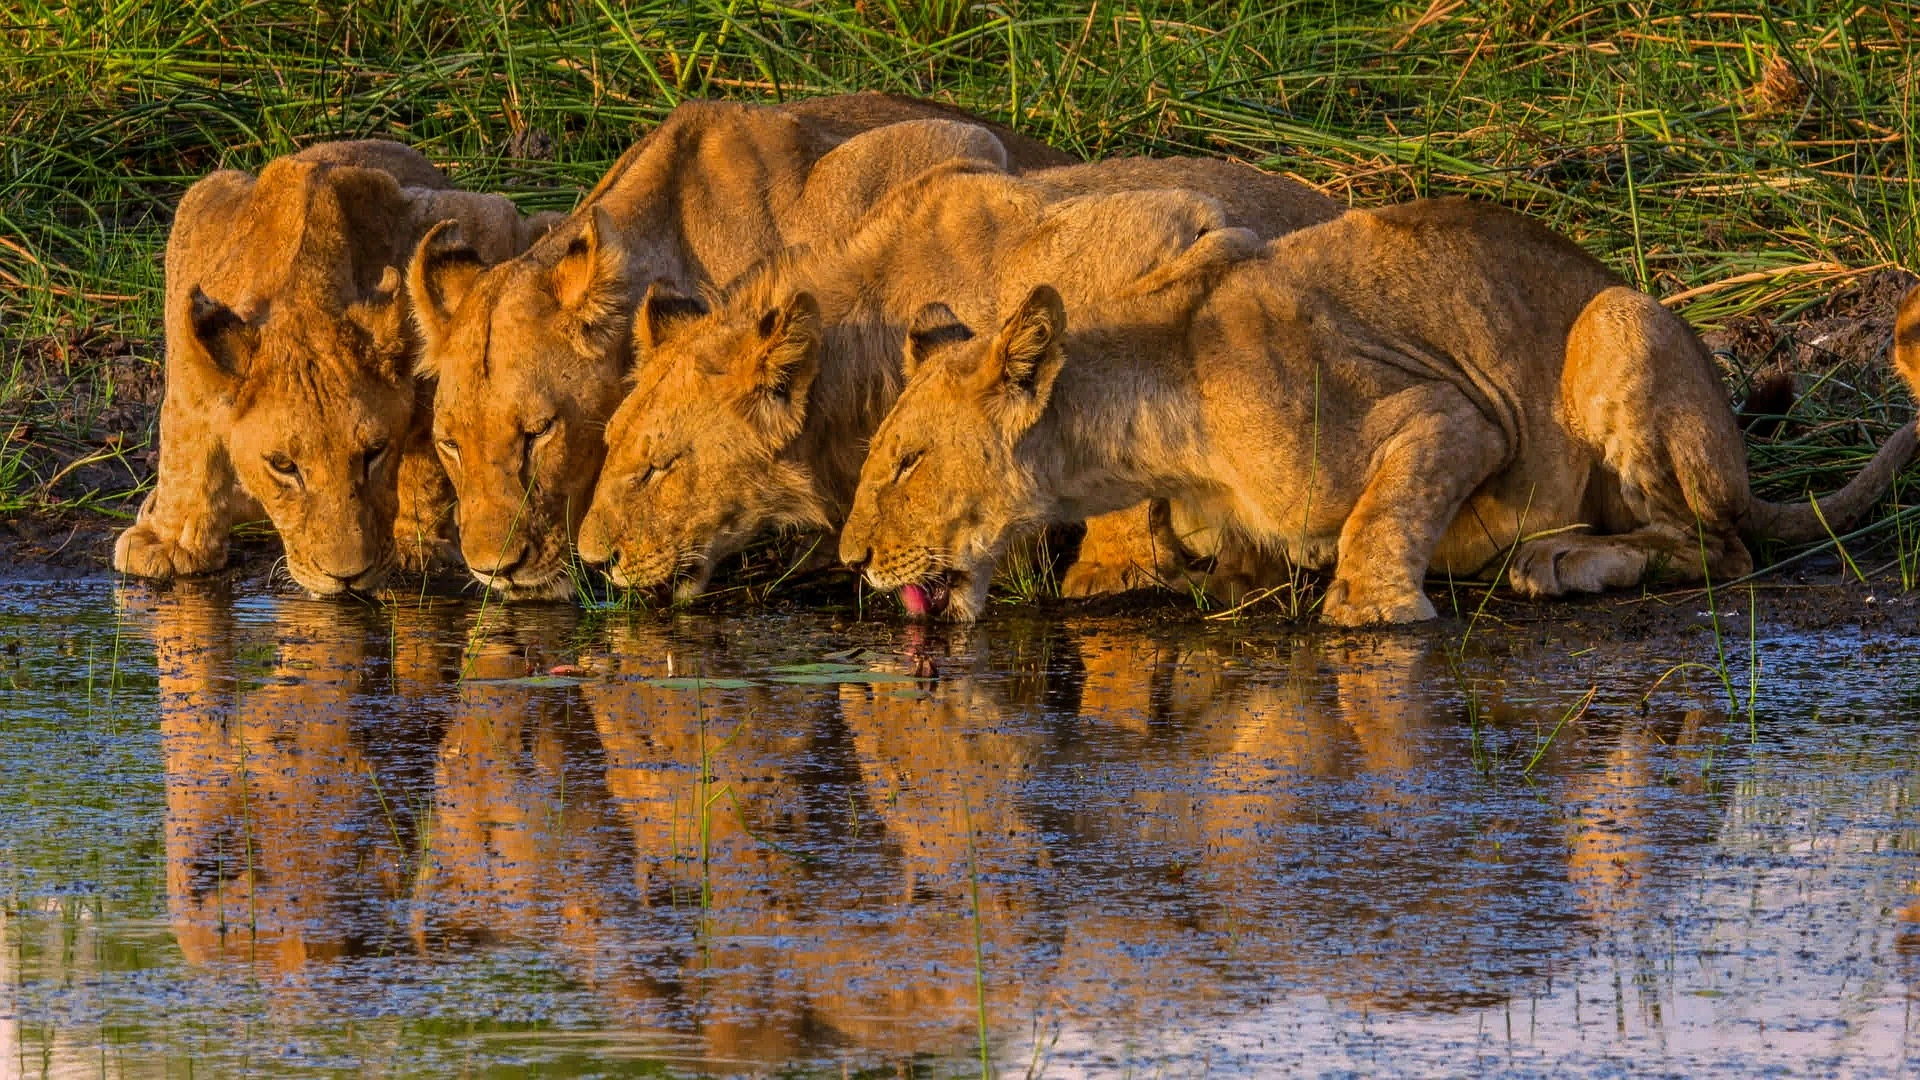 Safari Holiday Africa - Lions drinking water in Okavango Delta, Botswana